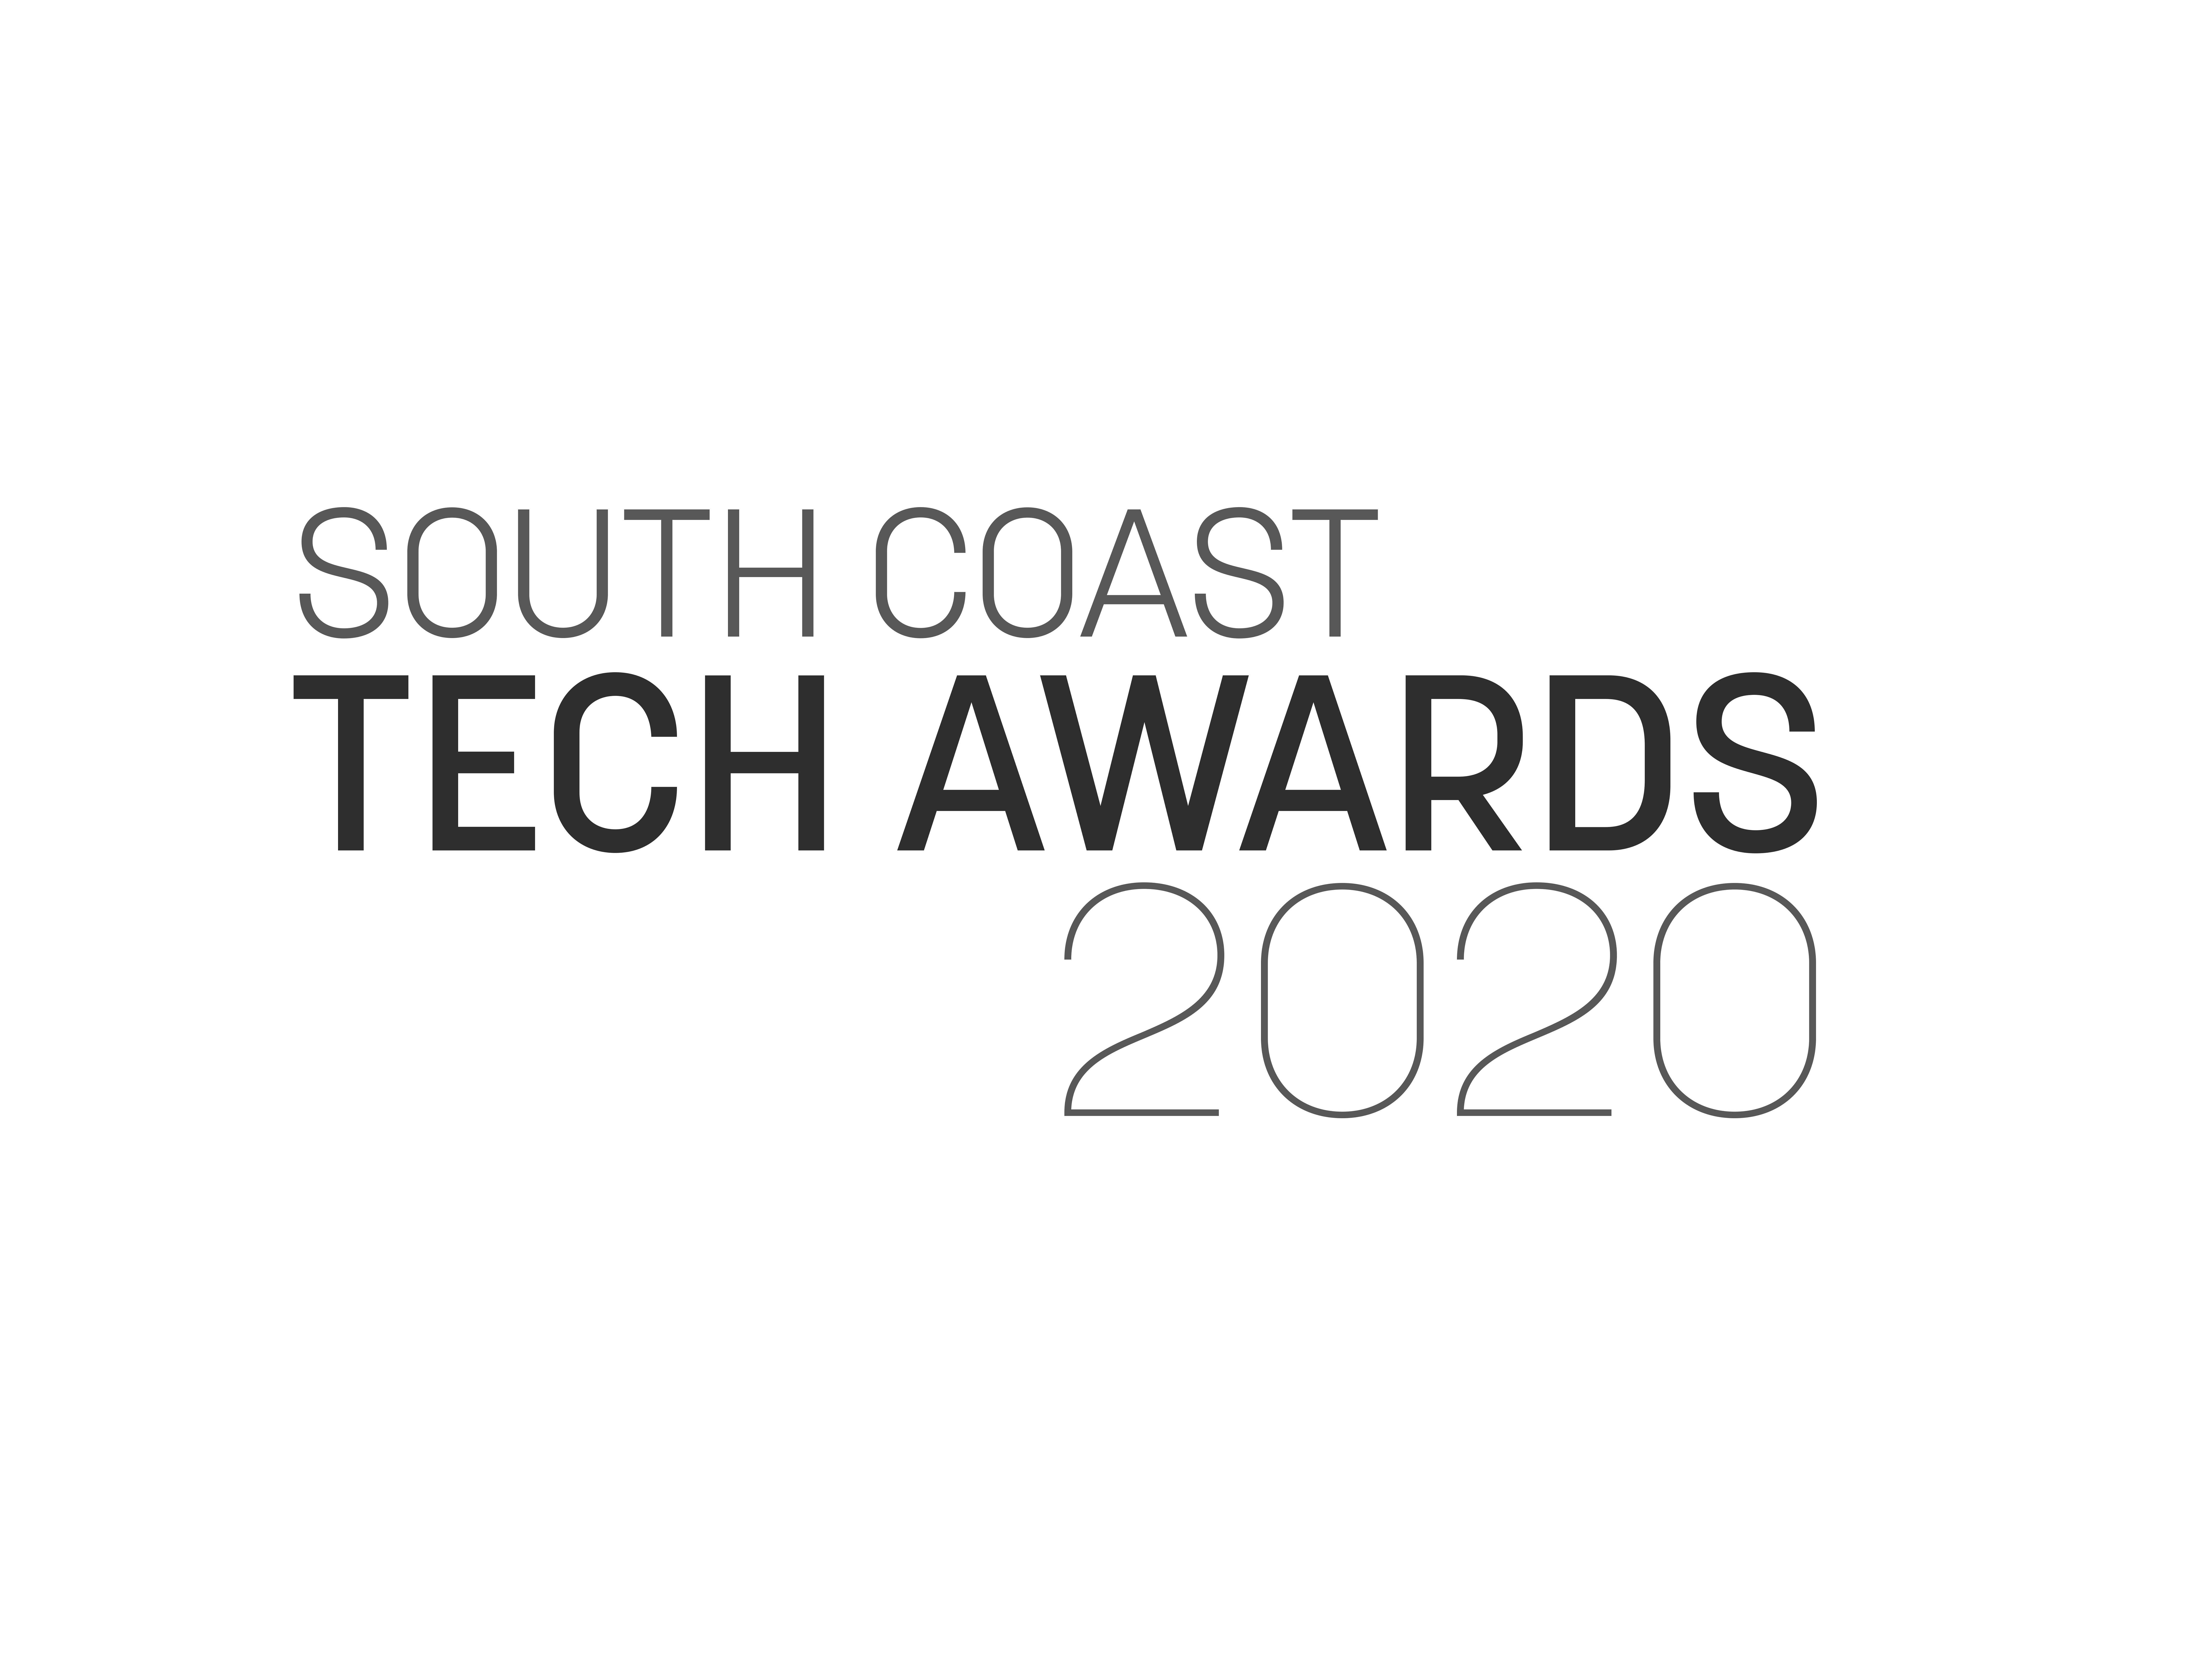 South Coast Tech Awards 2020